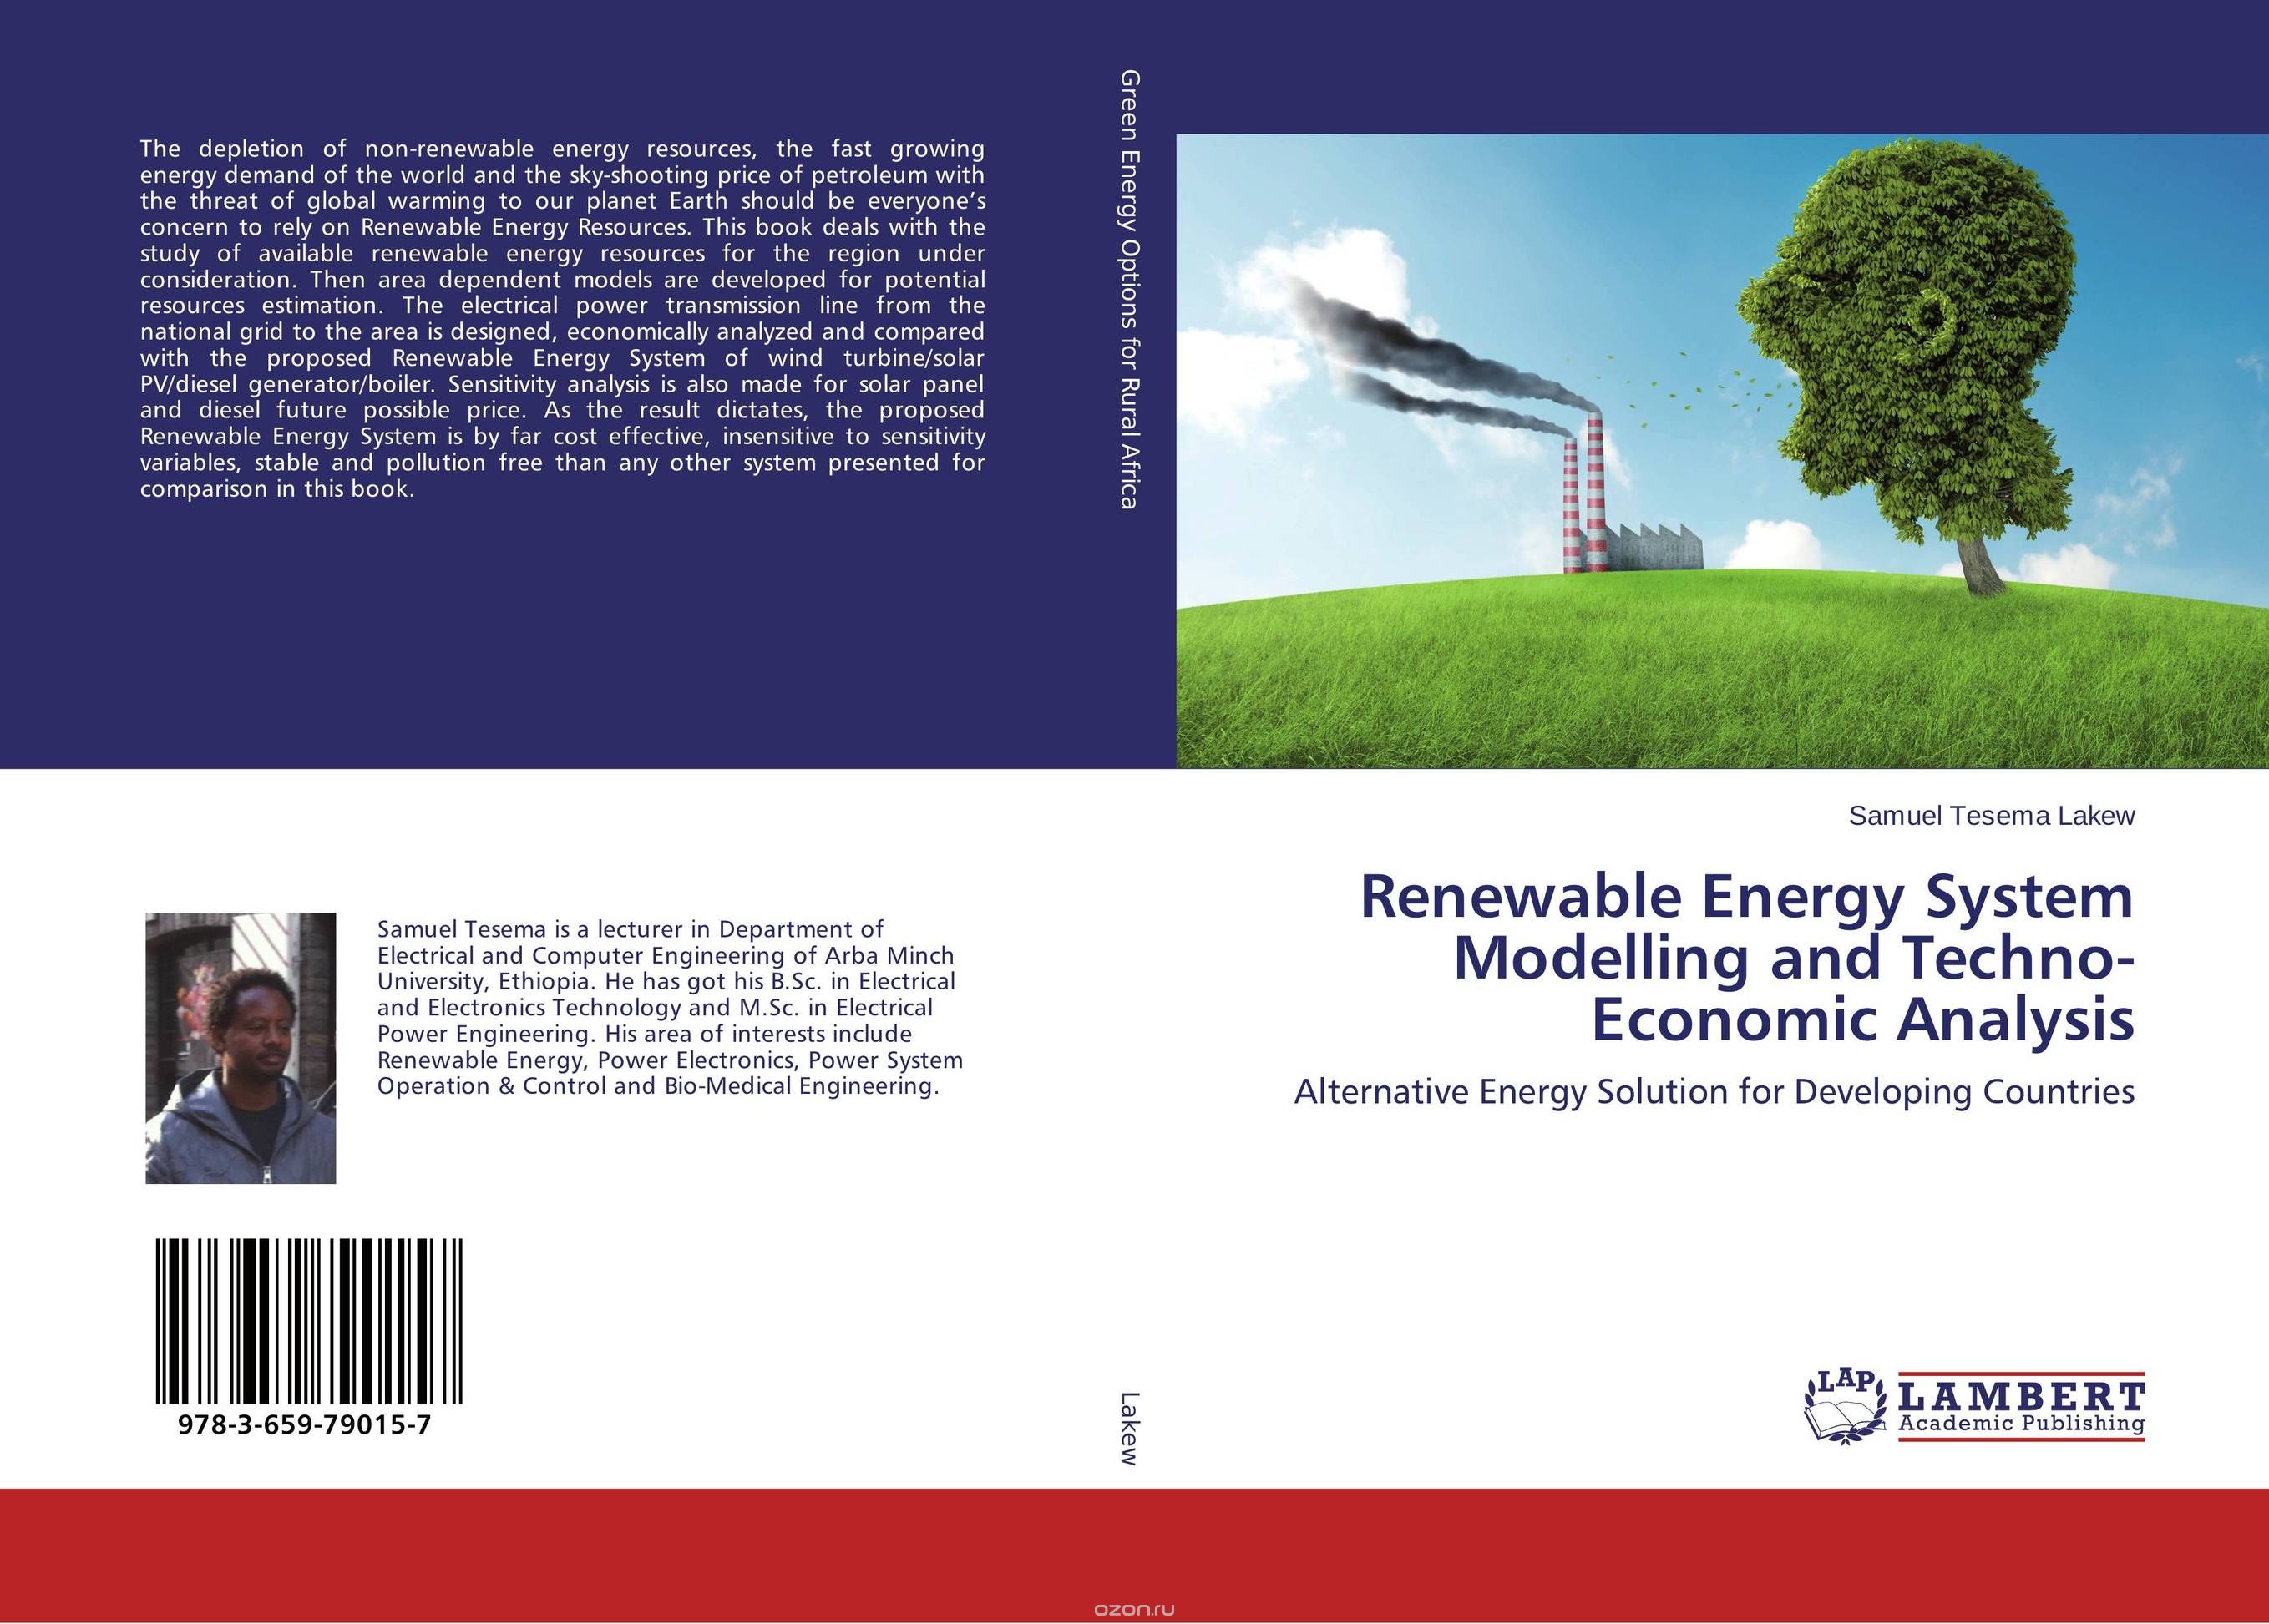 Renewable Energy System Modelling and Techno-Economic Analysis